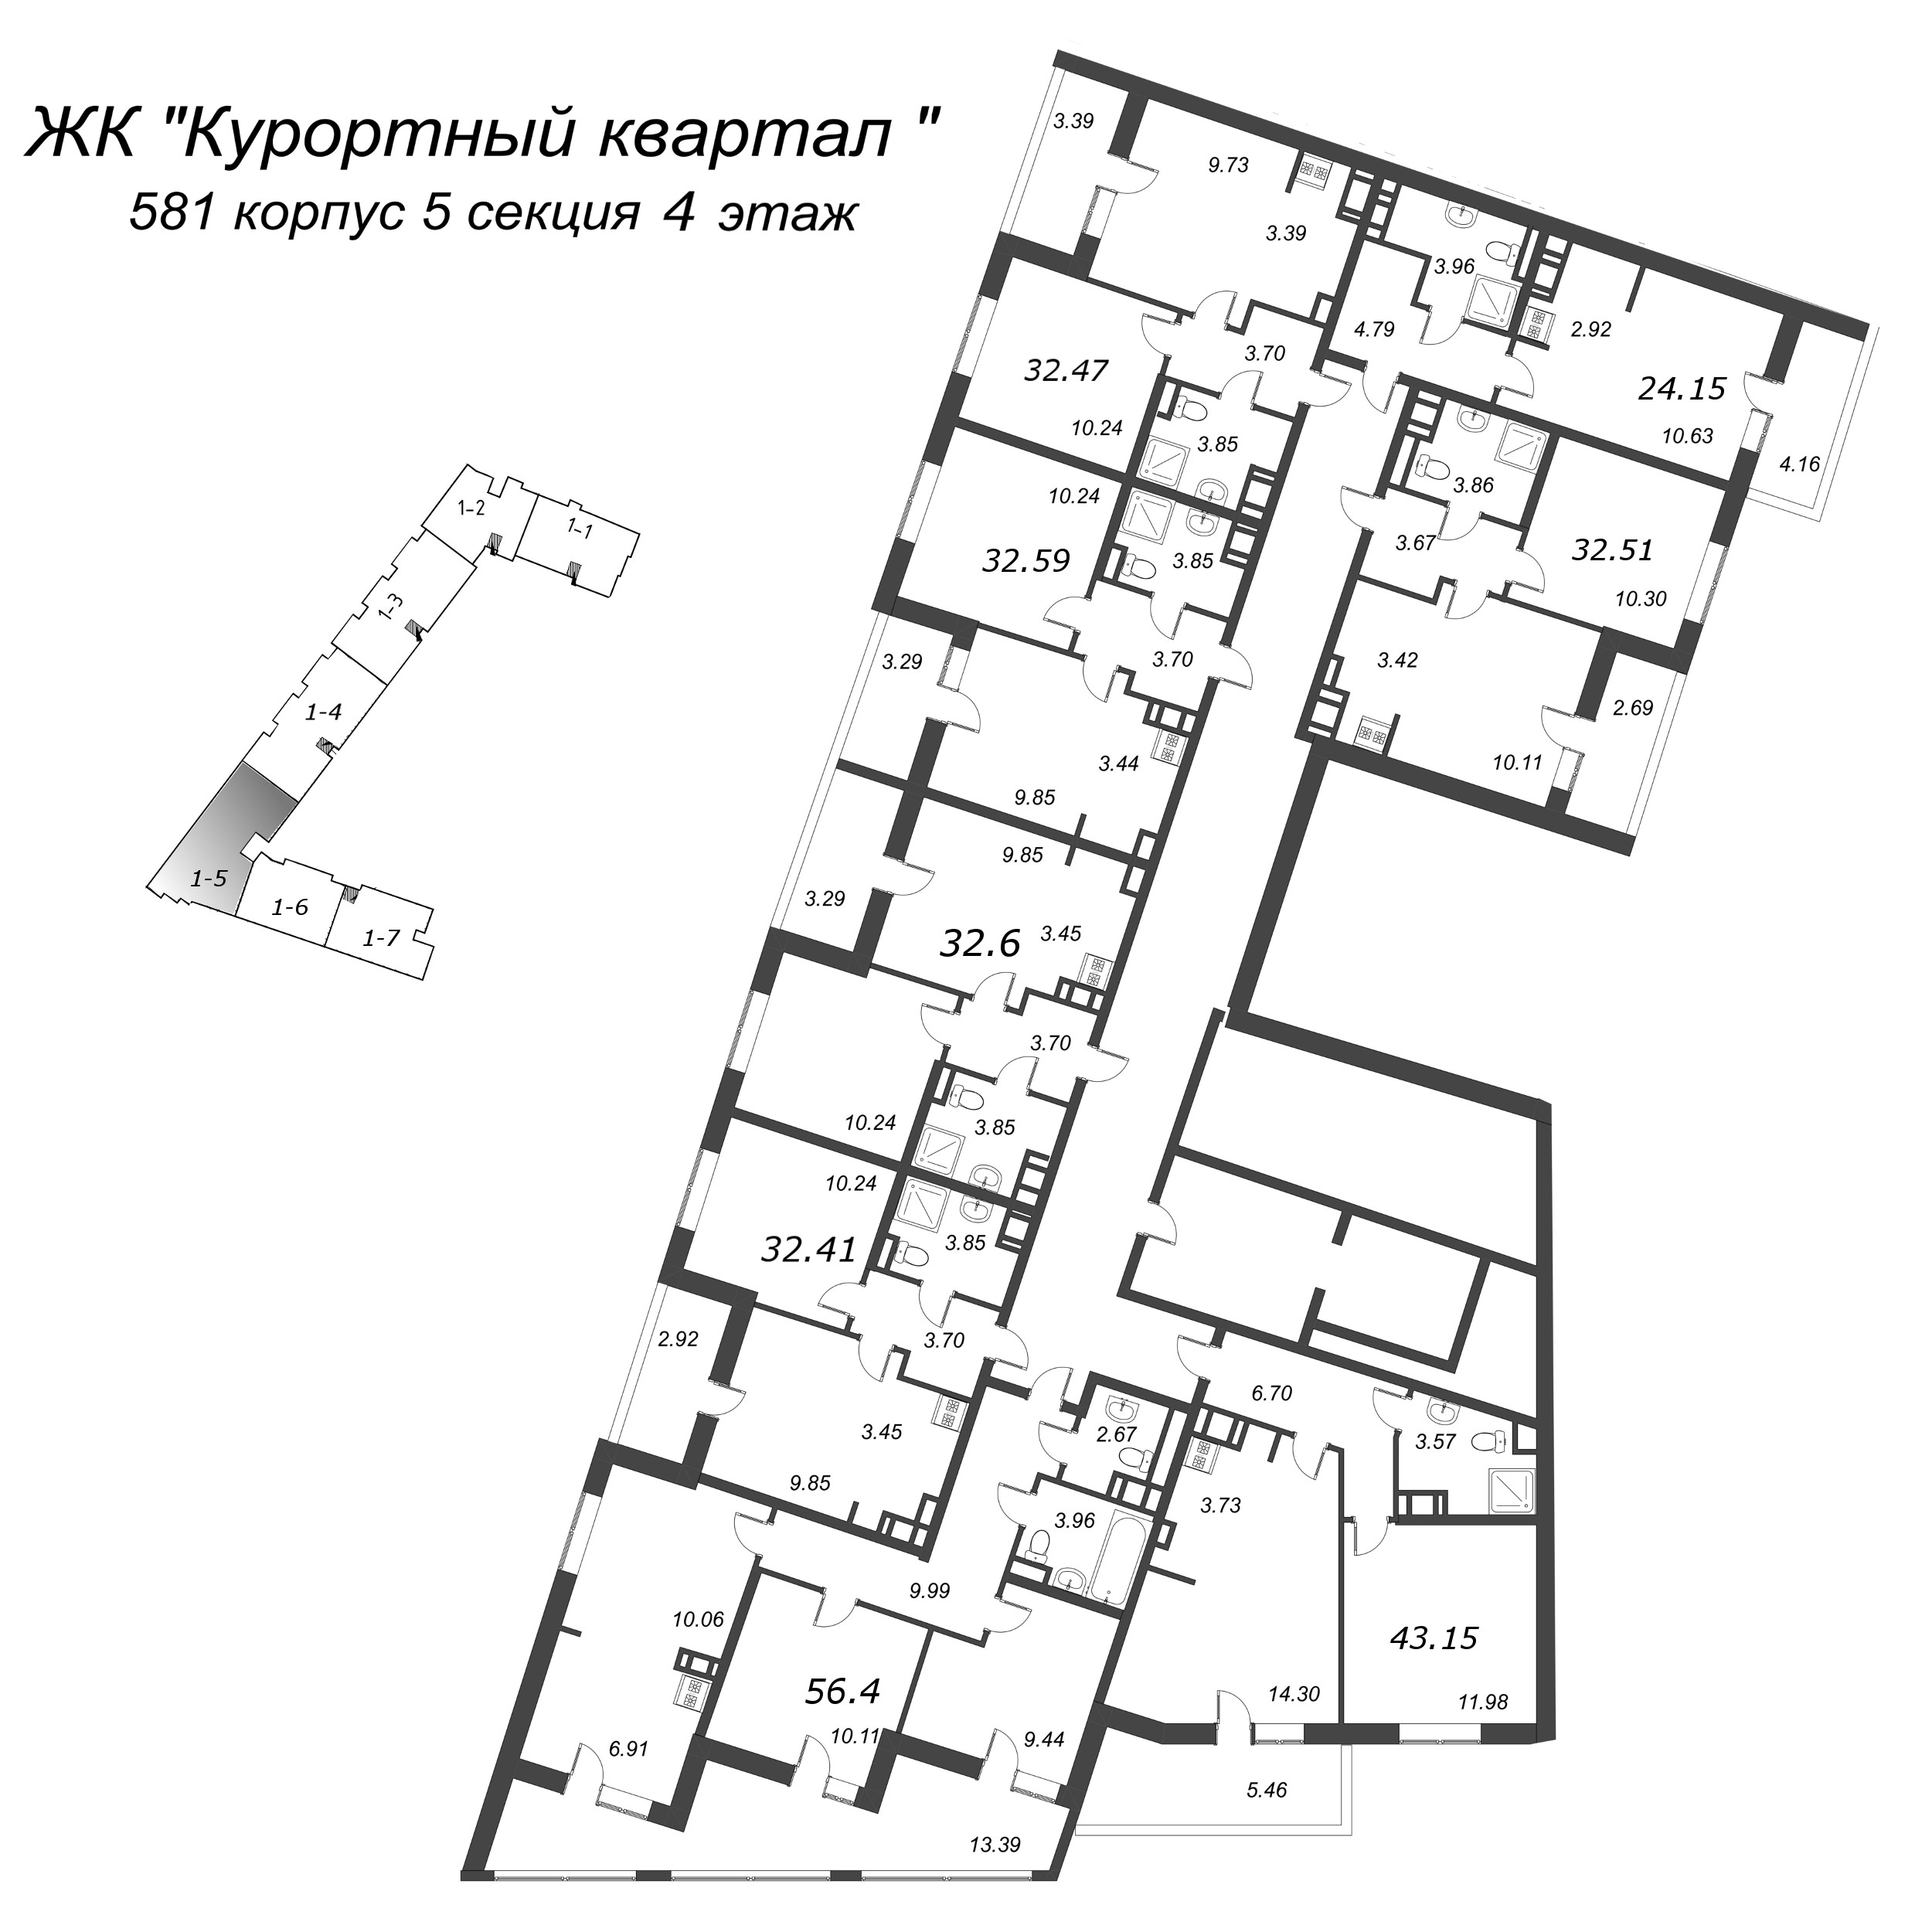 3-комнатная (Евро) квартира, 56.4 м² - планировка этажа